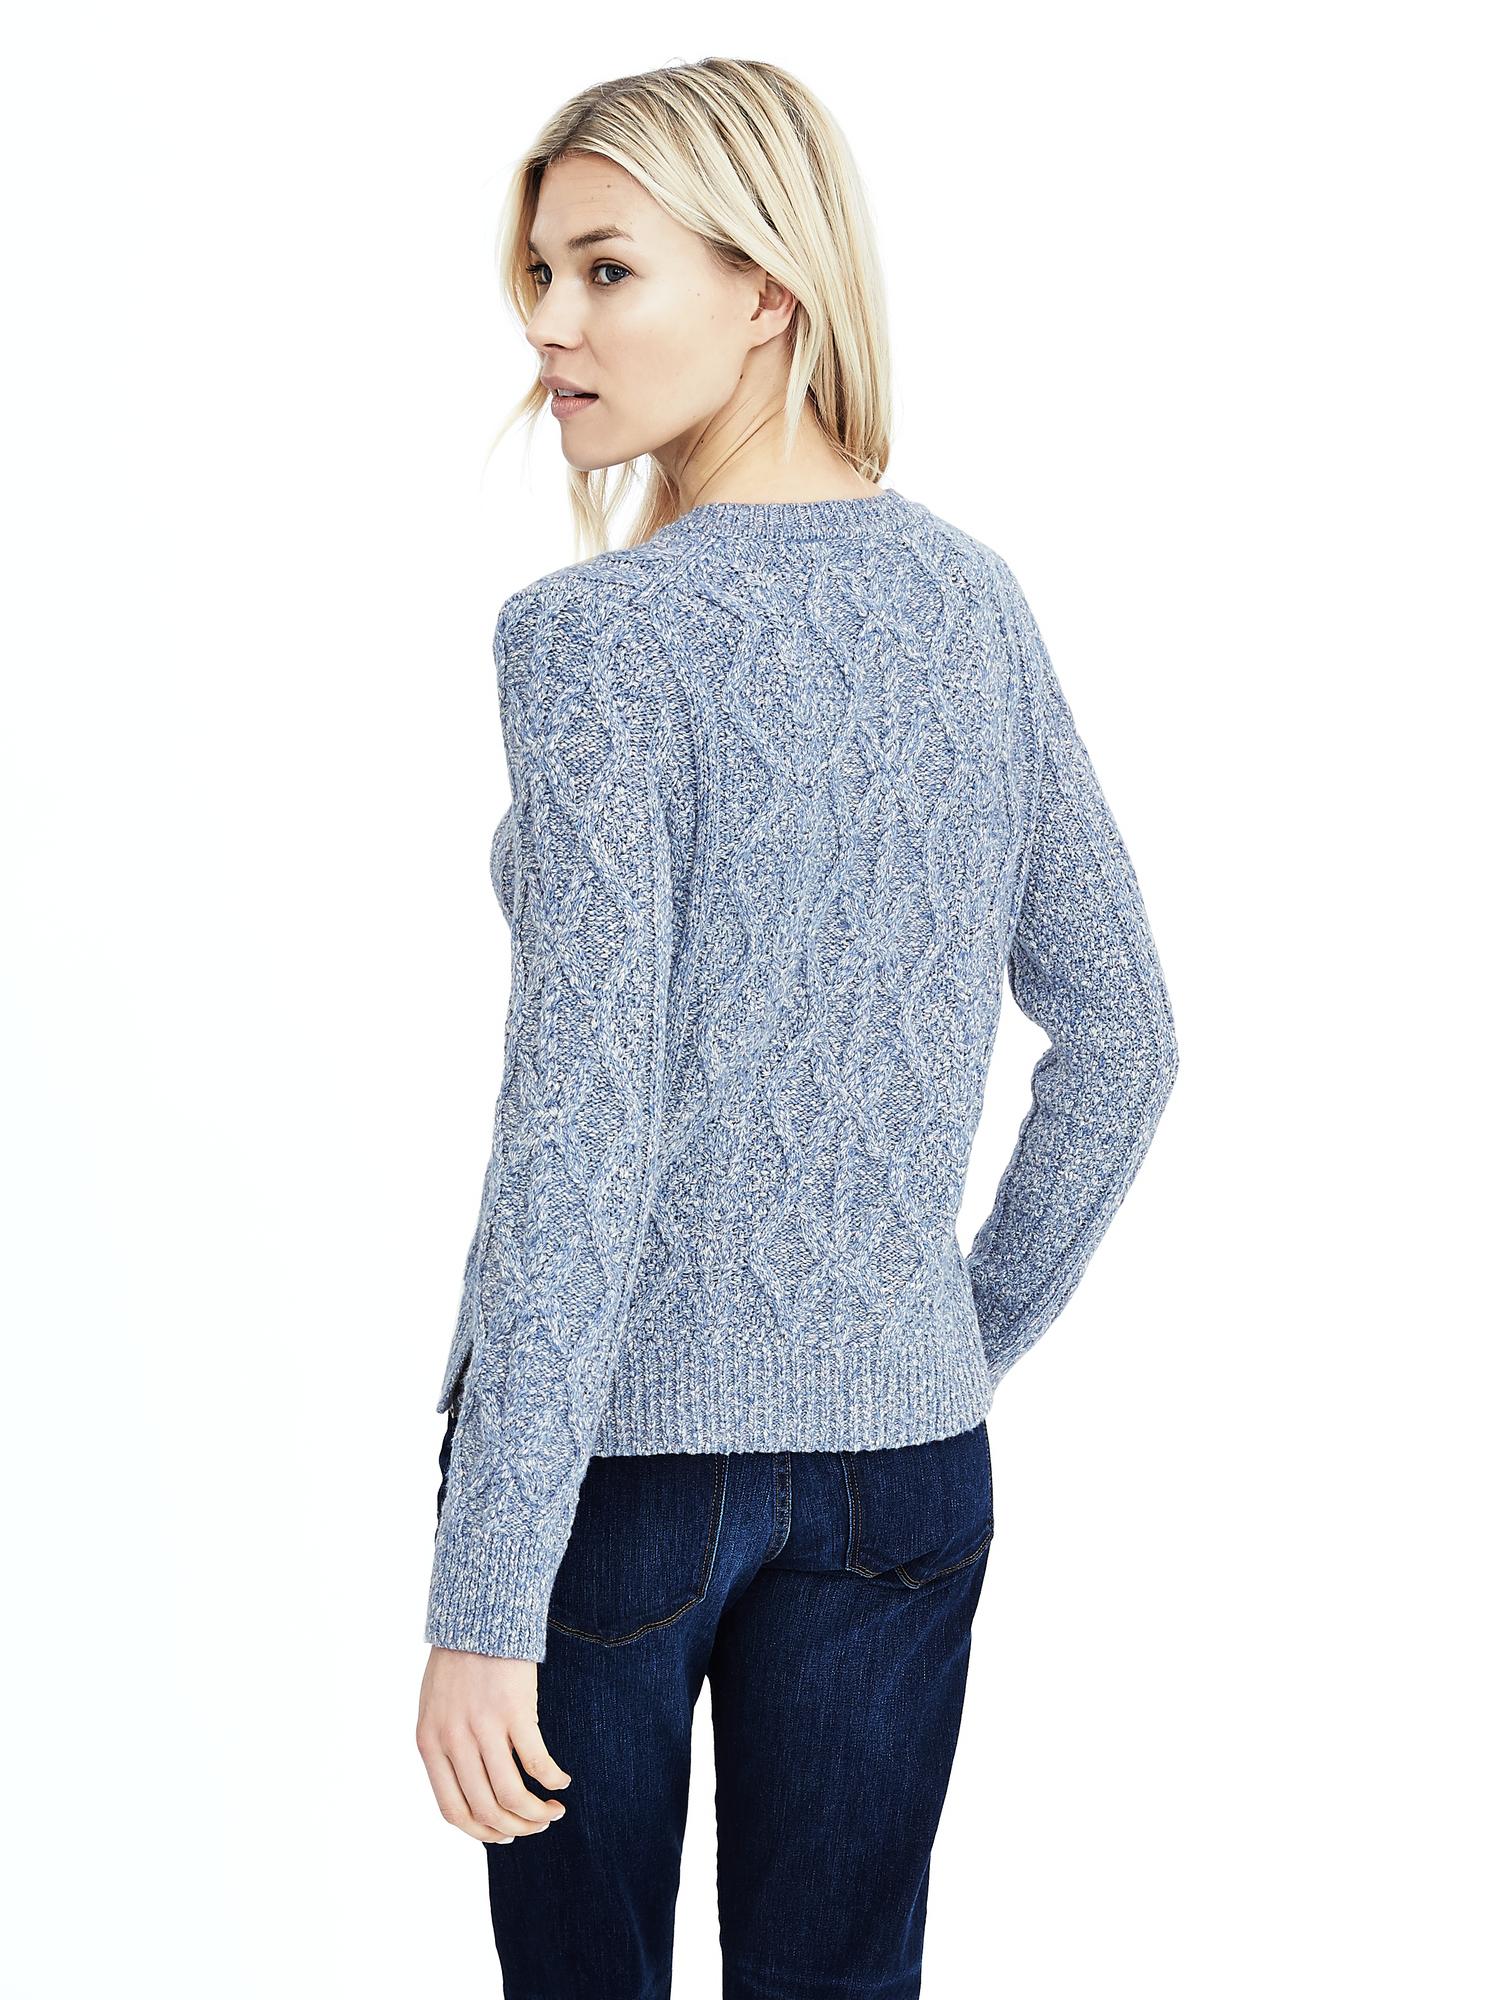 Cable Crewneck Sweater